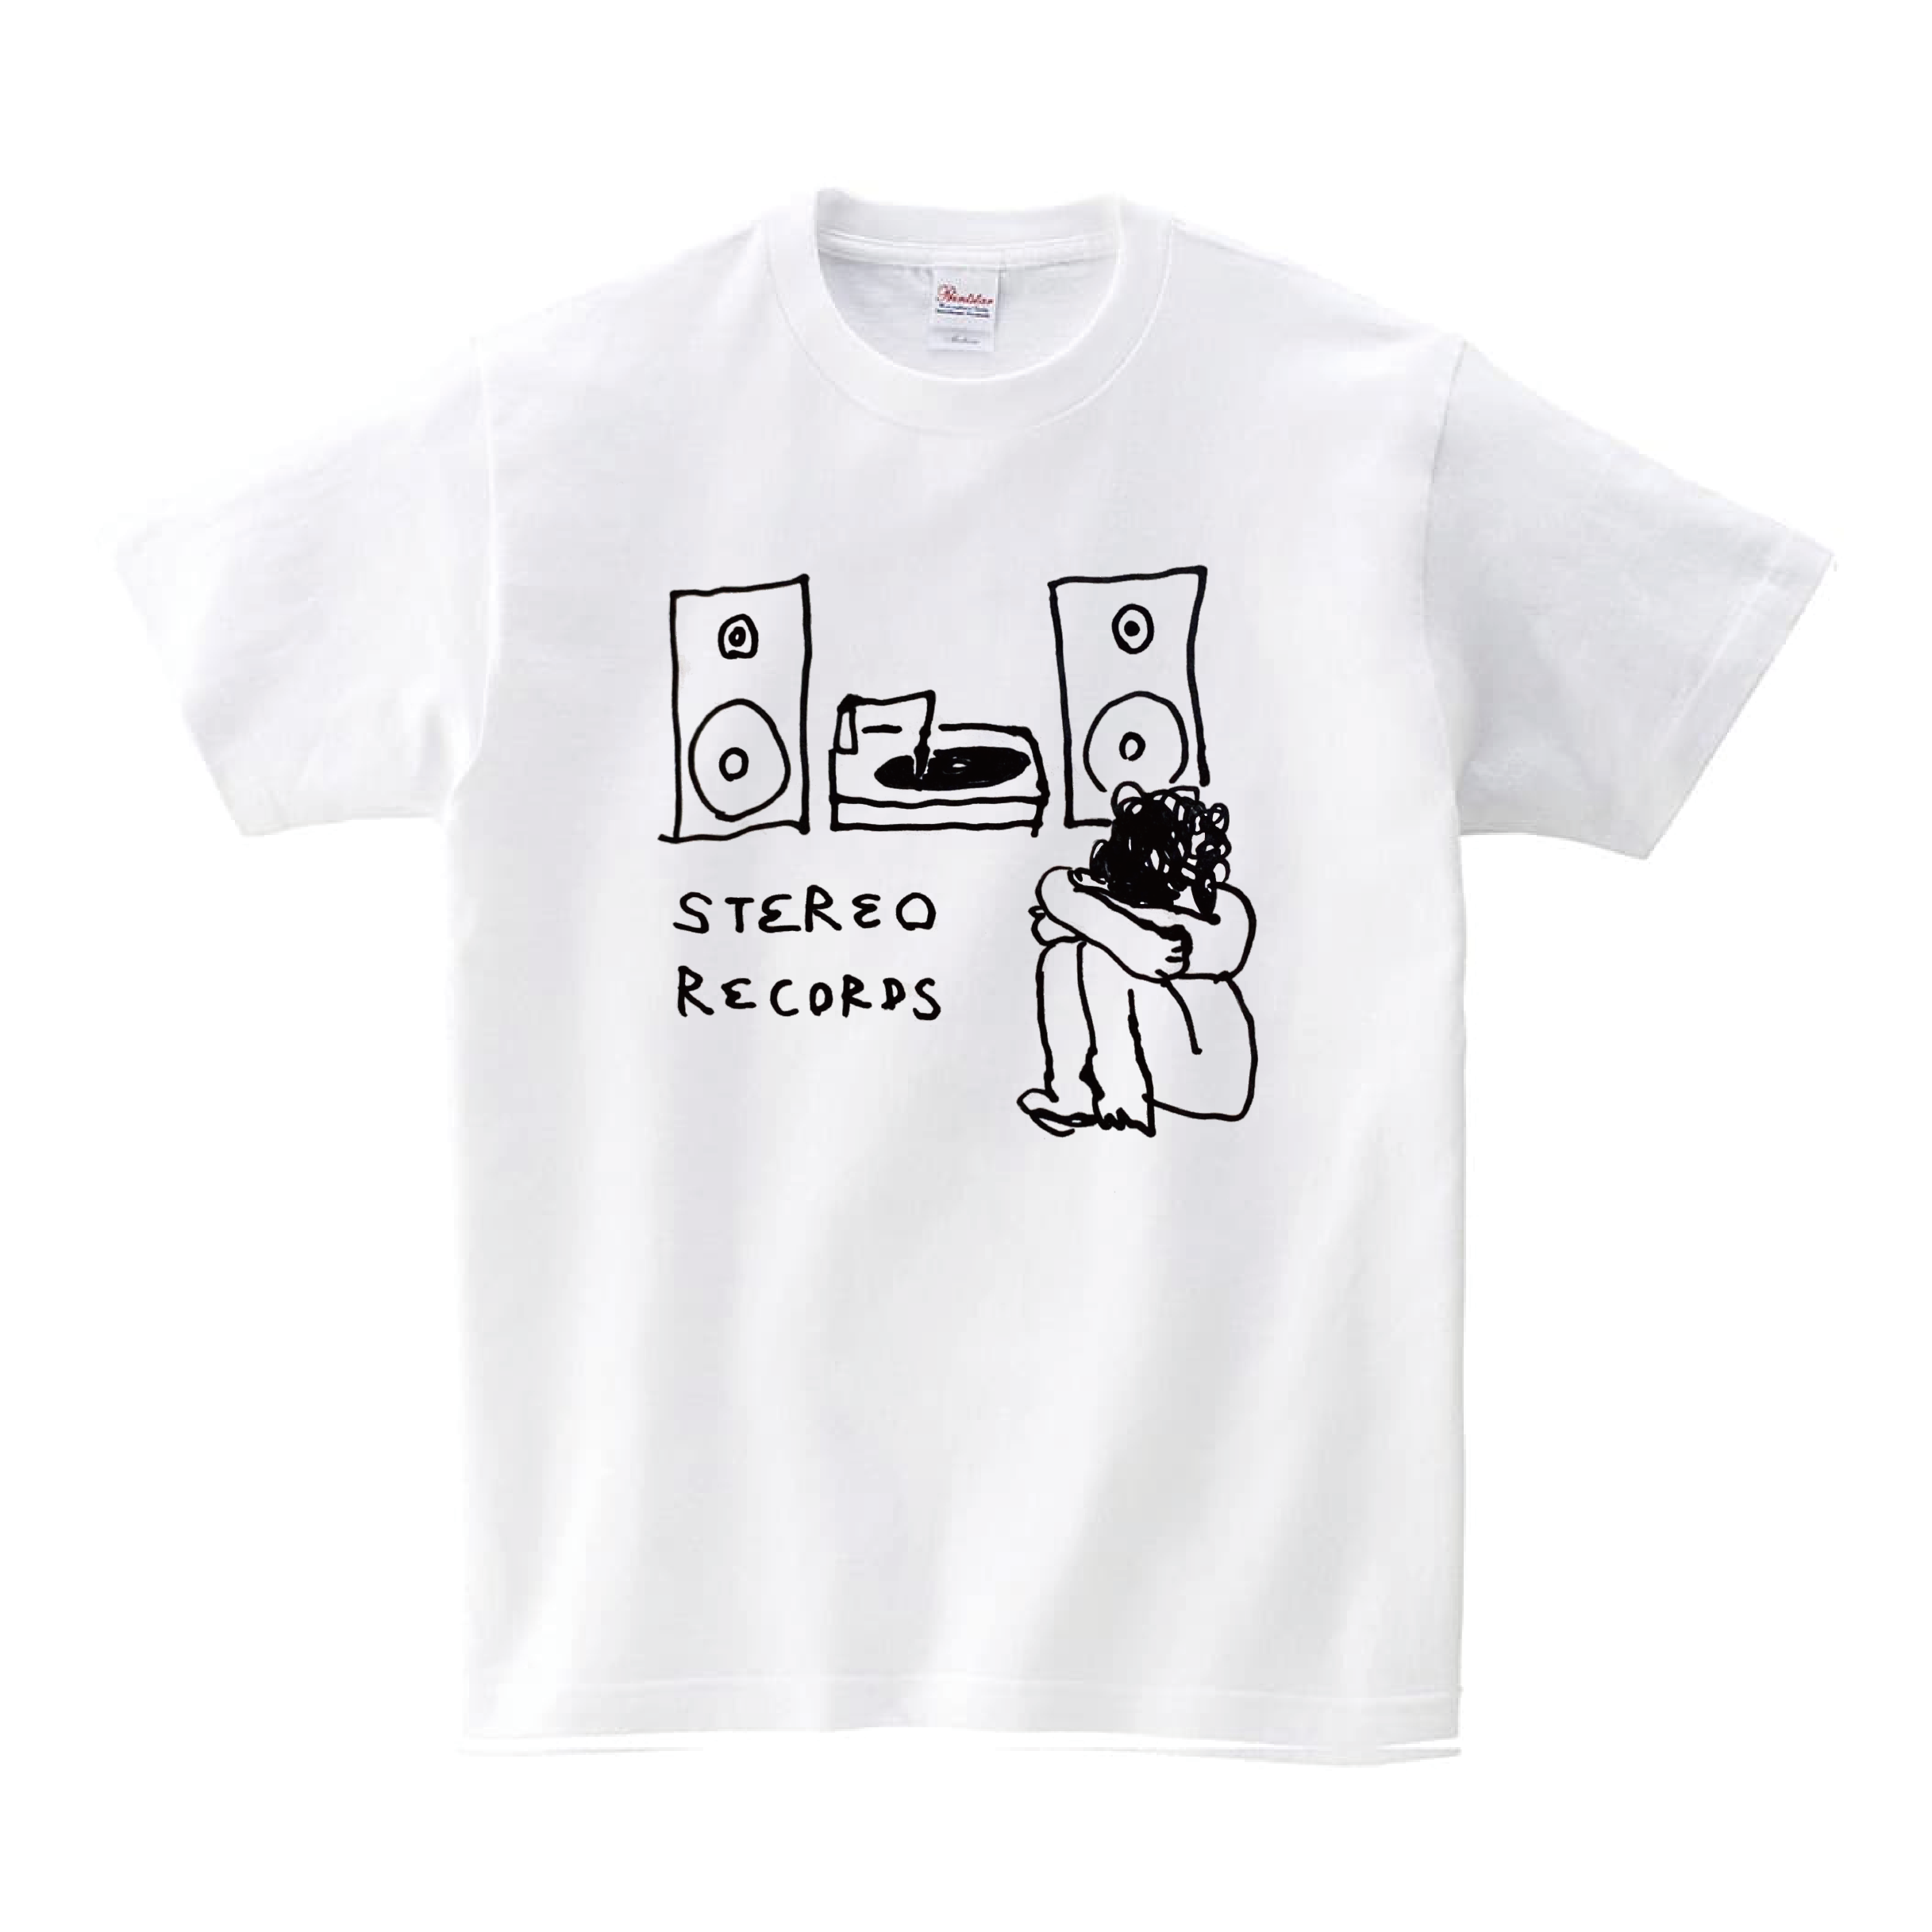 STEREO RECORDS T-SHIRTS XL SIZE (design by RIKI HIDAKA)